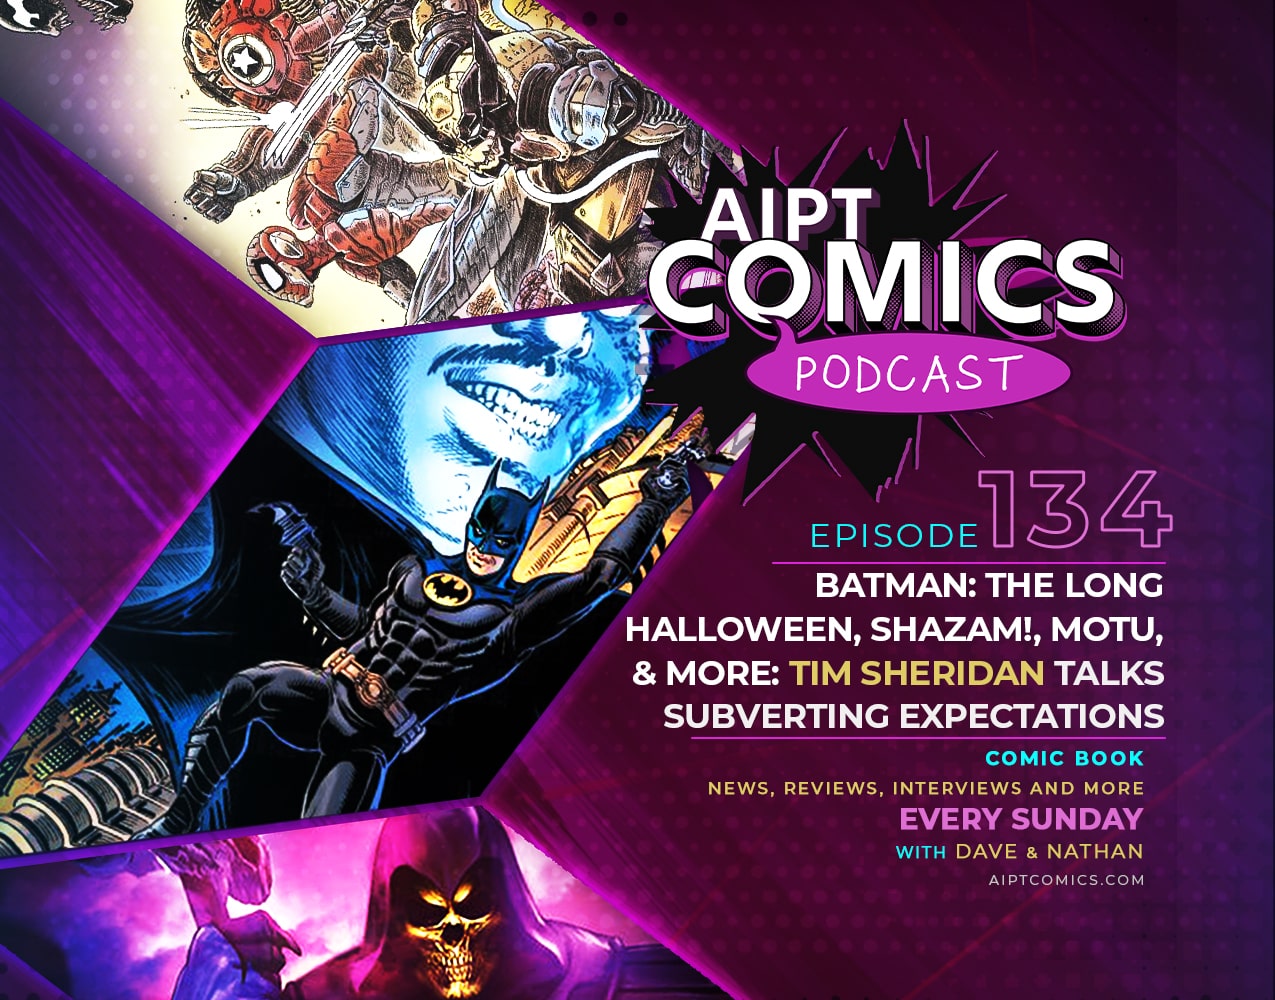 AIPT Comics podcast episode 134: 'Batman: The Long Halloween,' 'Shazam,' MOTU, & more: Tim Sheridan talks subverting expectations